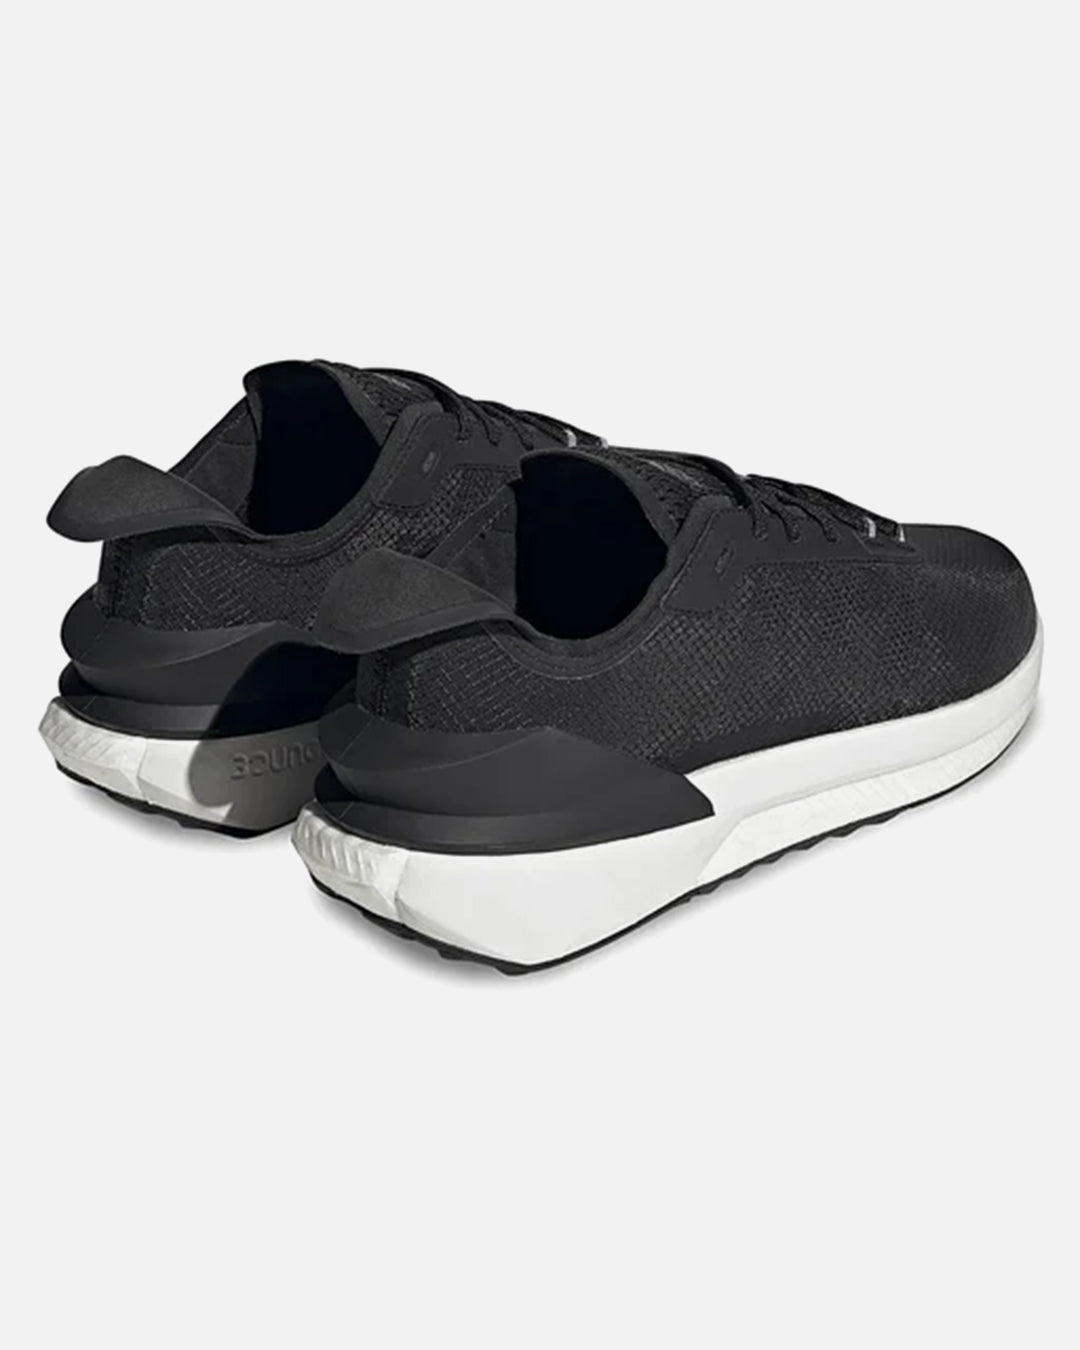 Adidas Avryn - Black/White